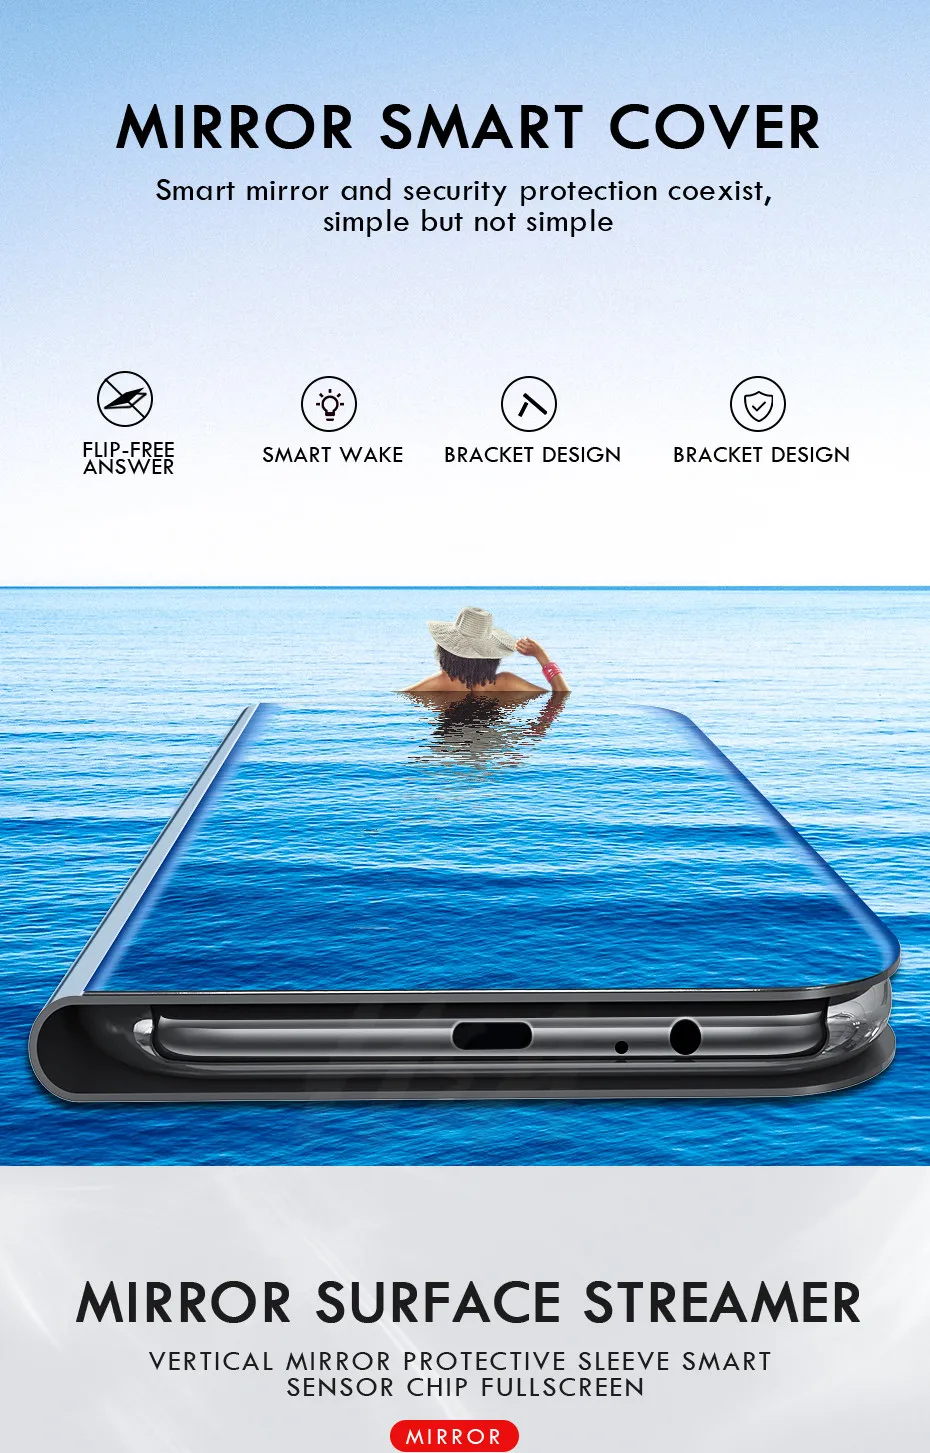 H& четкое представление умный зеркальный чехол для телефона для samsung Galaxy S9 S8 S7 S6 Edge Plus Note 8 9 для A3 A5 A7 A8 J3 J7 чехол